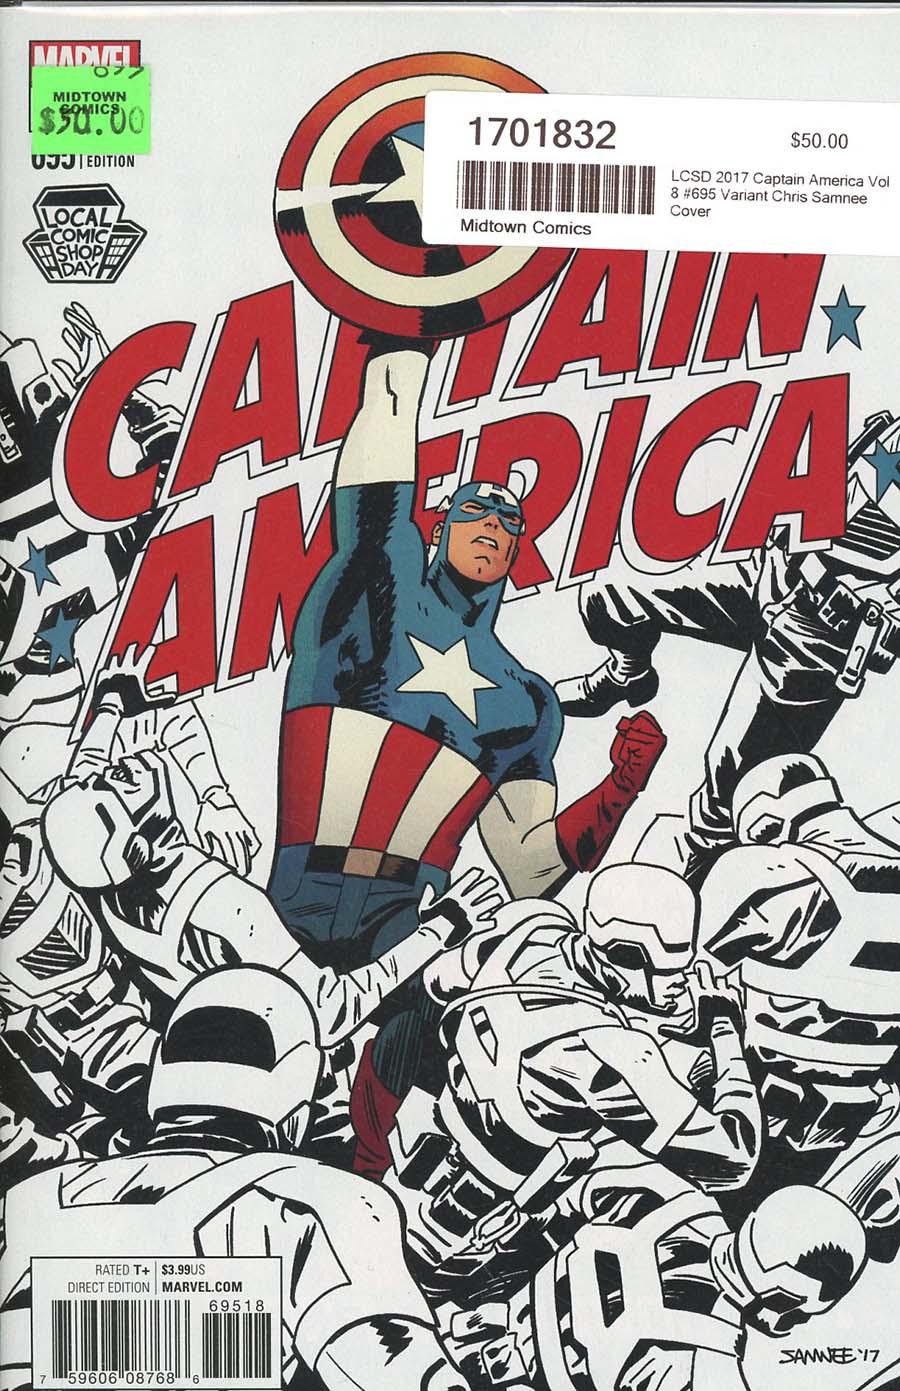 LCSD 2017 Captain America Vol. 8 #695